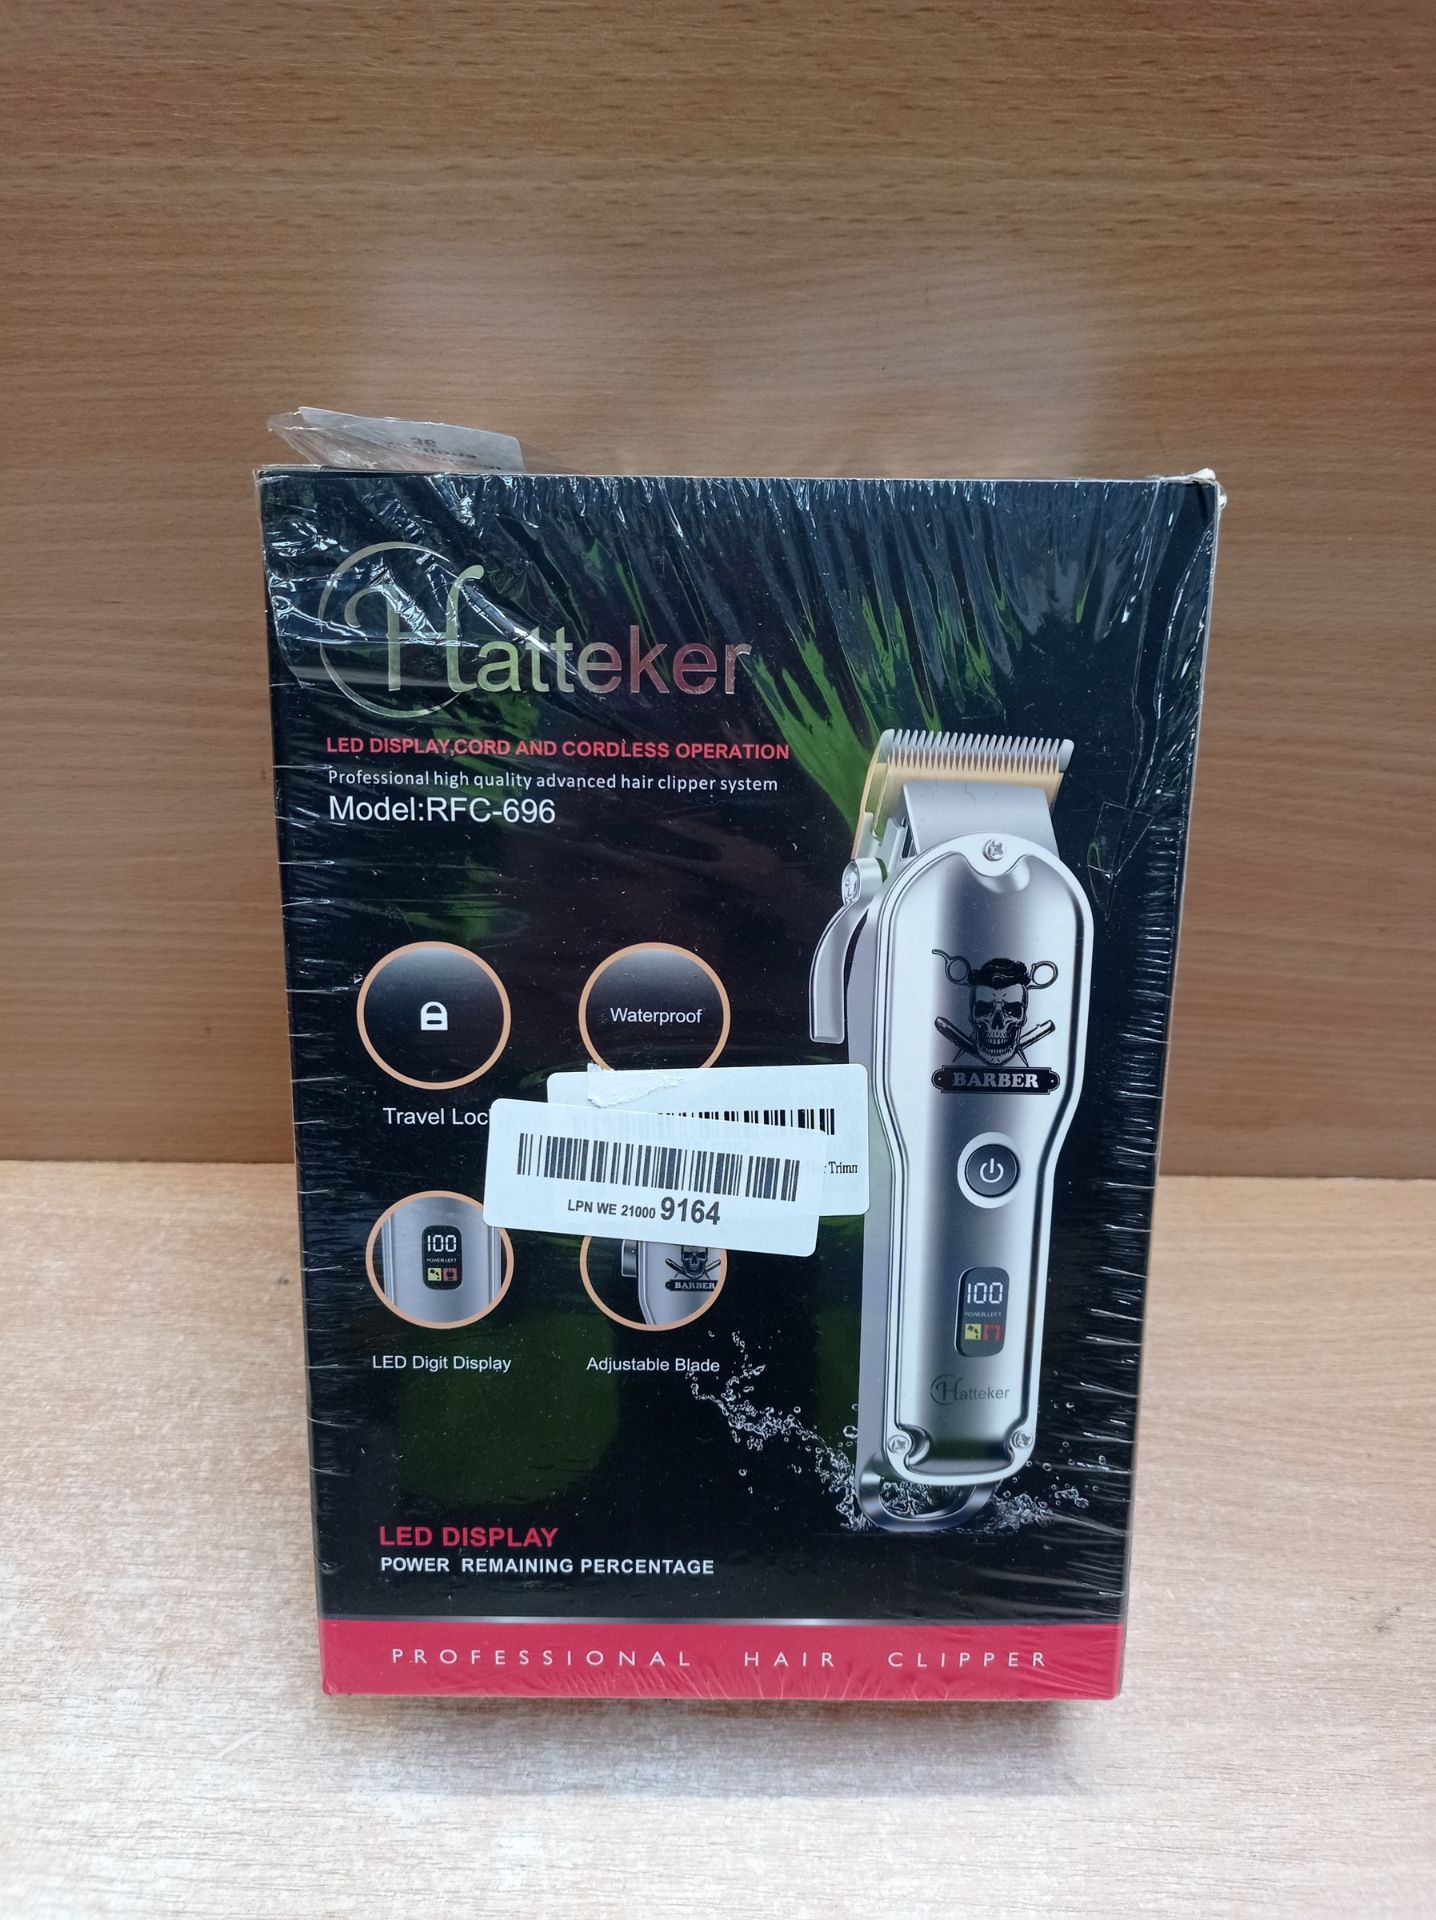 RRP £35.89 Hatteker Hair Cutting Kit Pro Hair Clippers for Men - Image 2 of 2